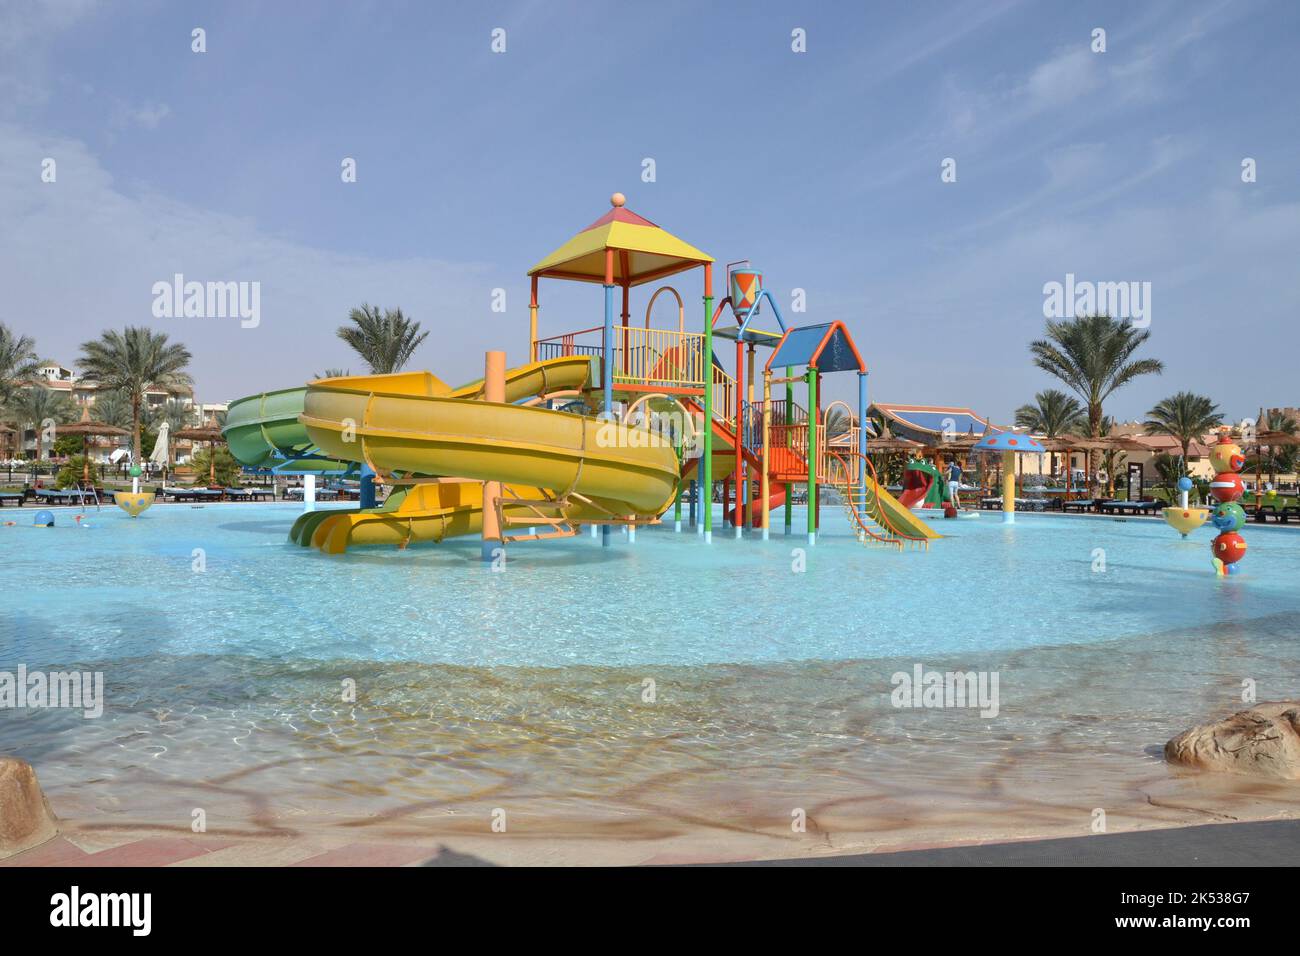 Urlaub Resort Hotel Pool Kinderbereich Stock Photo